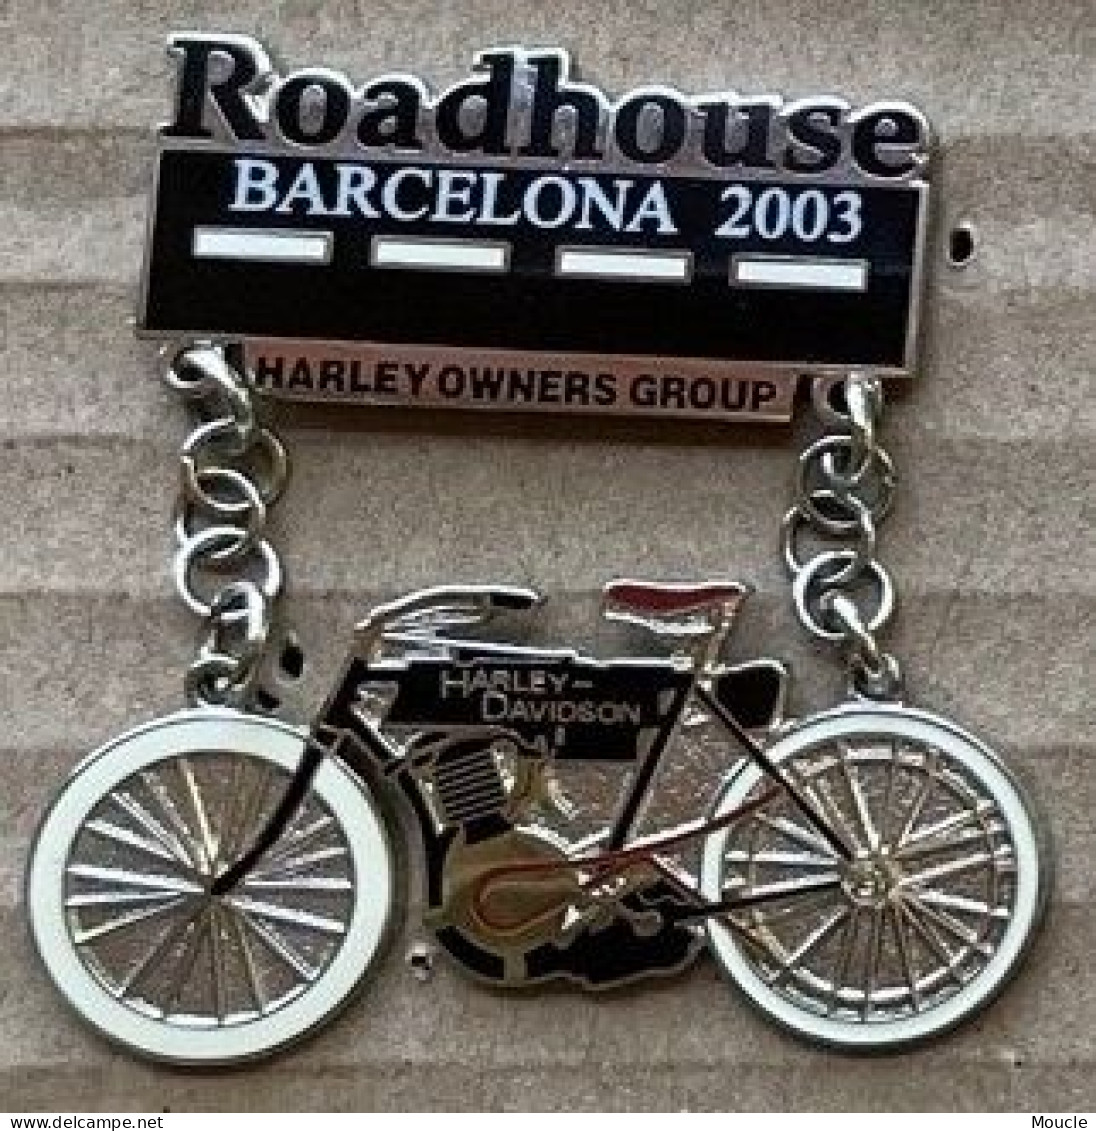 MOTO - HARLEY DAVIDSON - MOTORBIKE - MOTORRAD - ROADHOUSE BARCELONA 2033 - HARLEY OWNERS GROUPE - HG - (BLANCO) - Motorbikes